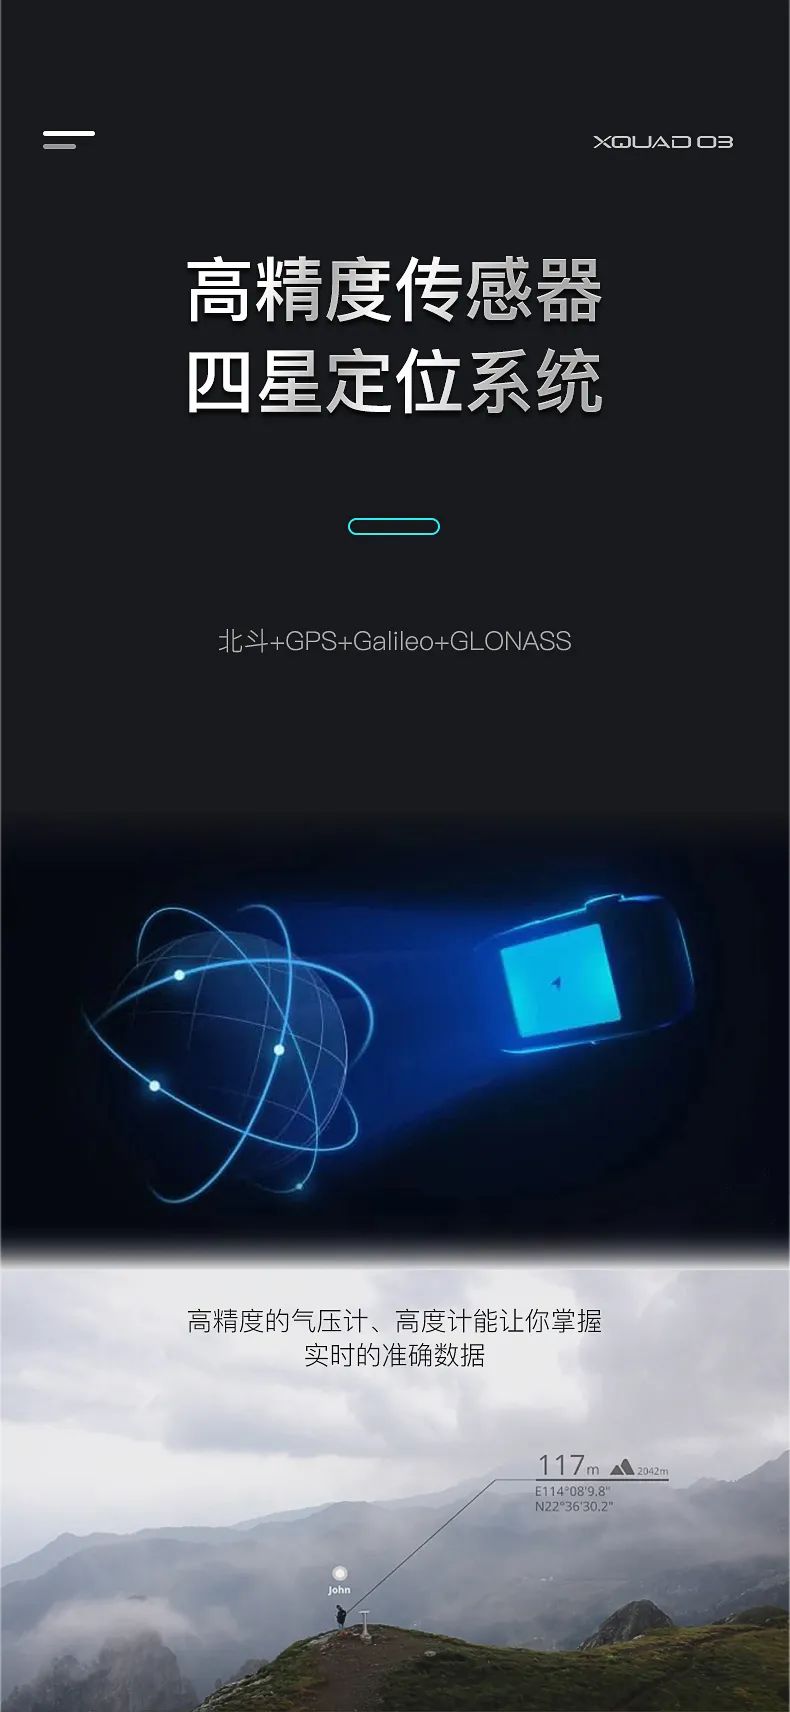 「goTele」推出新一代Xquad GPS 追踪器插图8